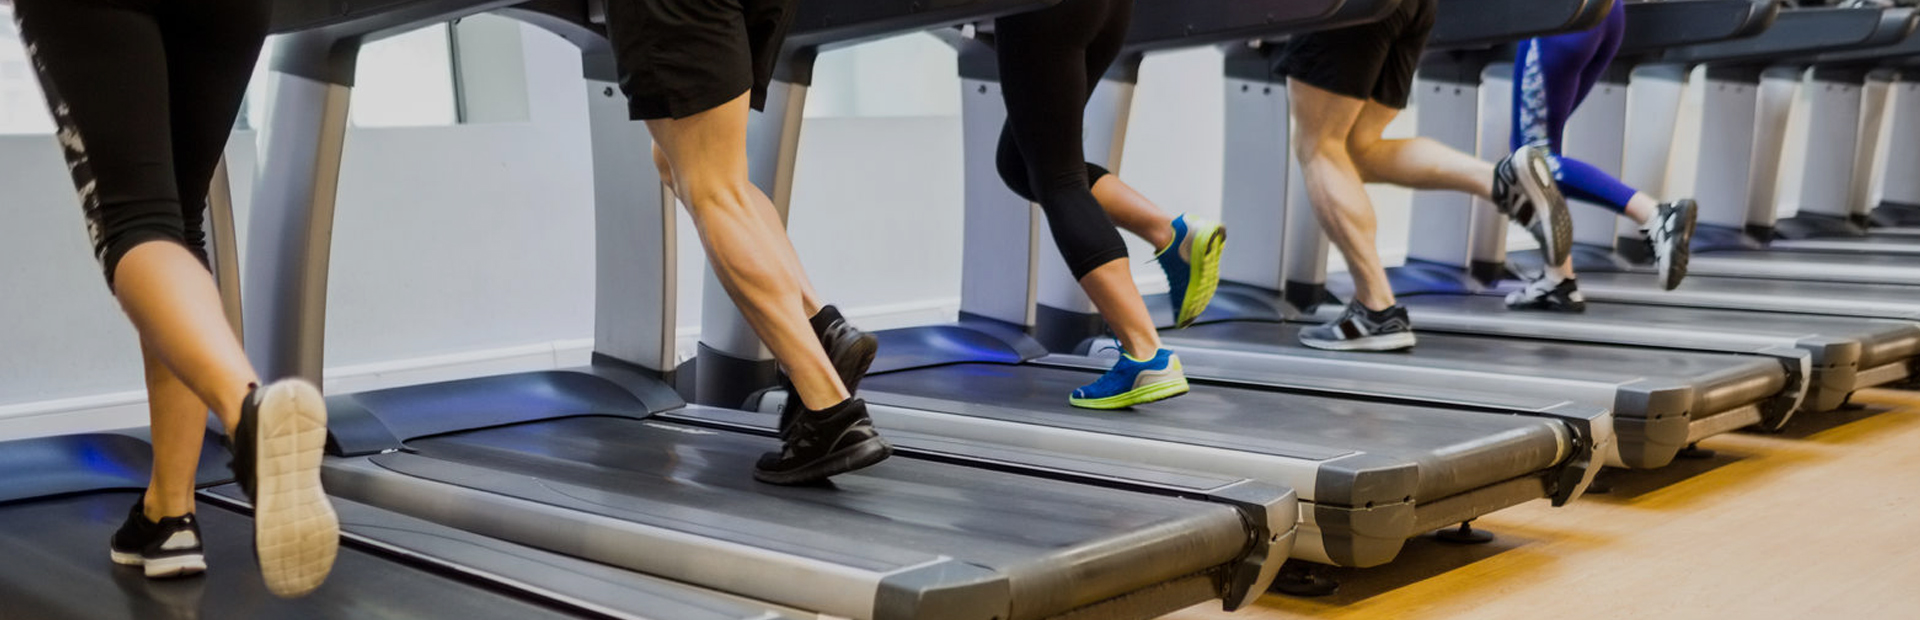 Runners on a treadmill